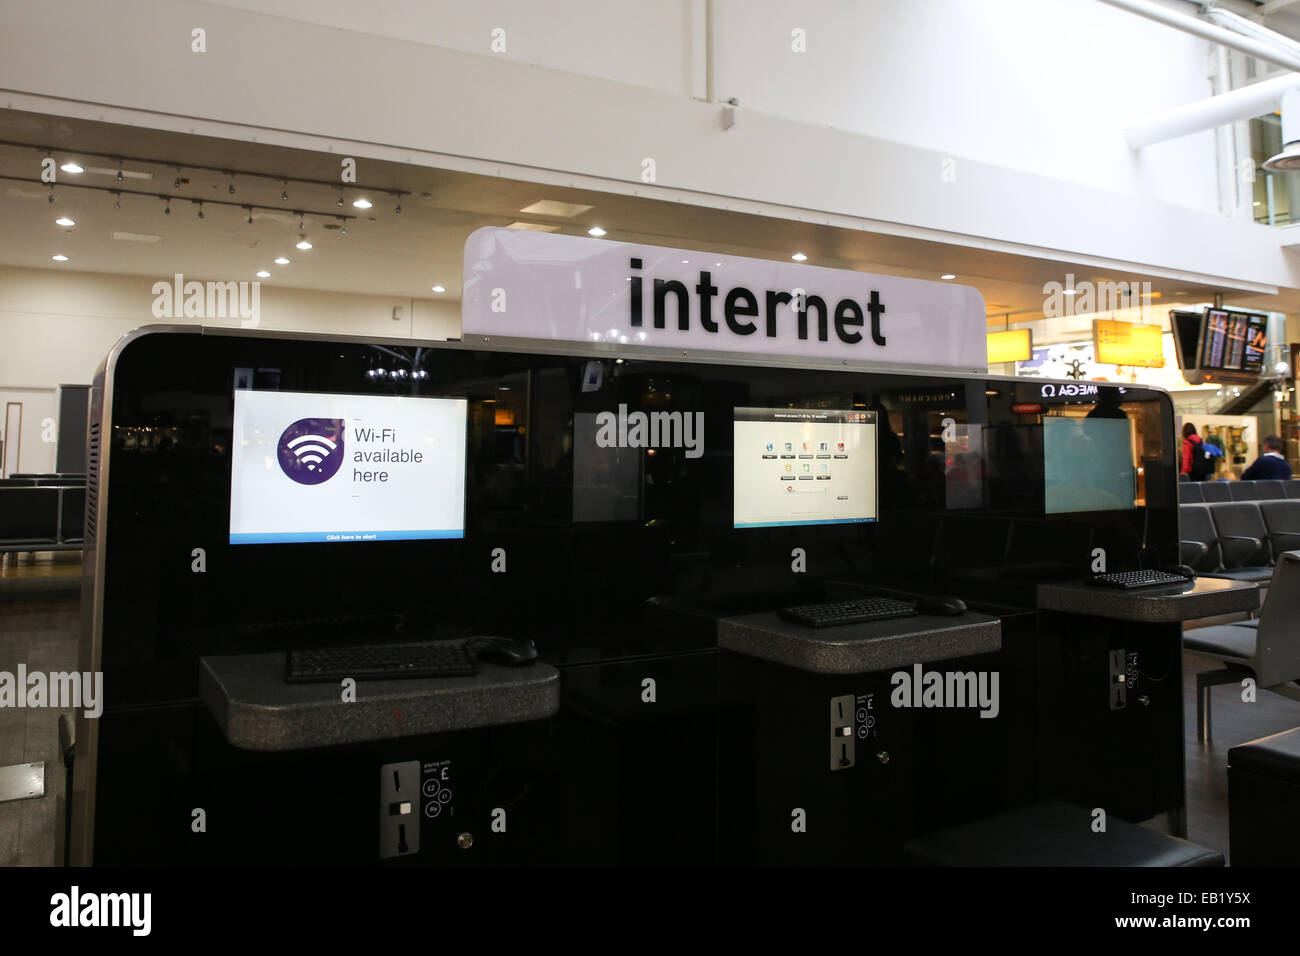 Internet Wifi inside London airport Stock Photo